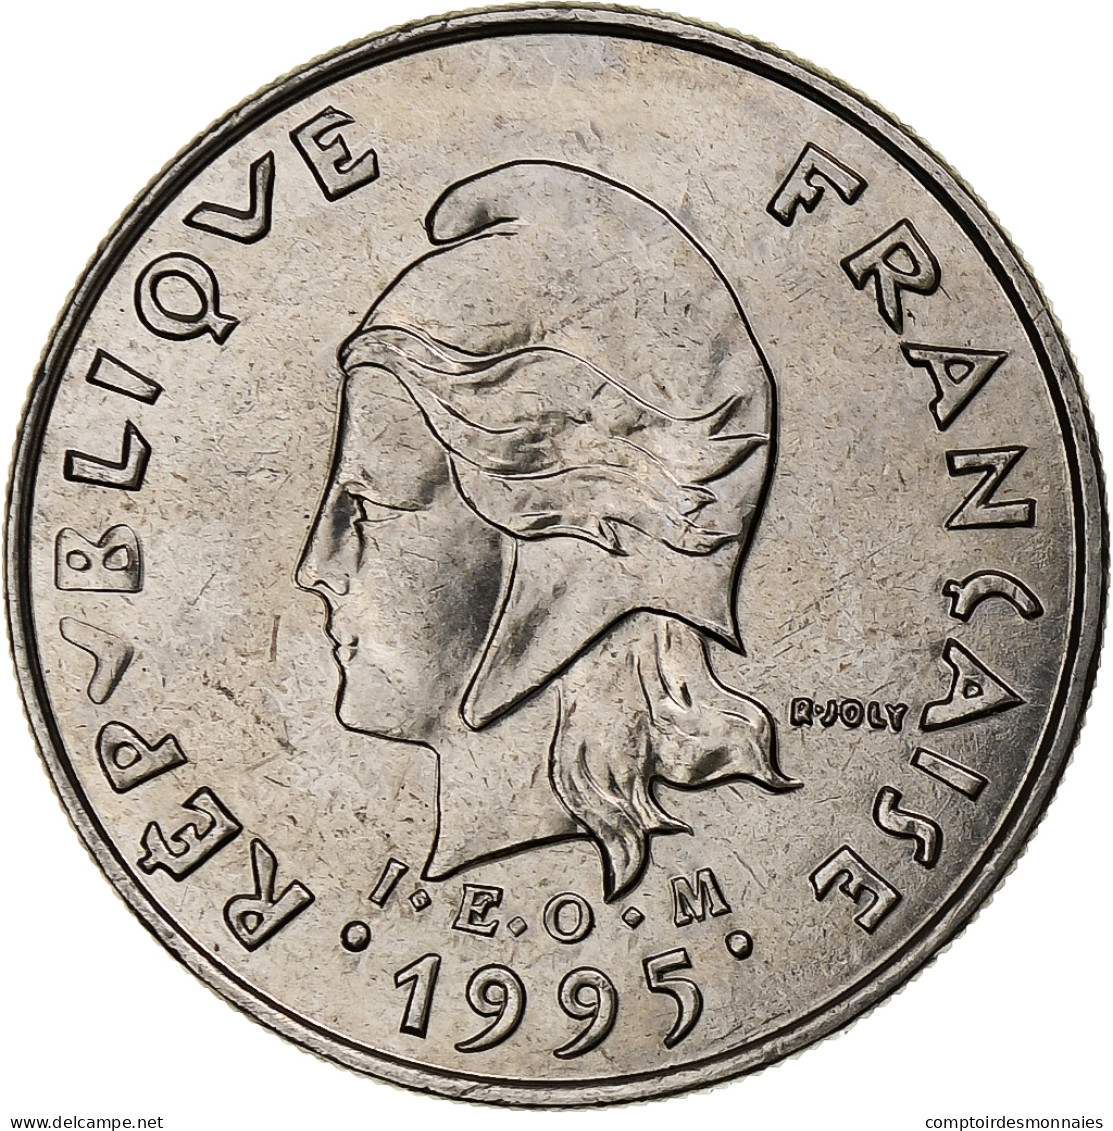 Polynésie Française, 10 Francs, 1995, Pessac, I.E.O.M., Nickel, SPL, KM:8 - Französisch-Polynesien